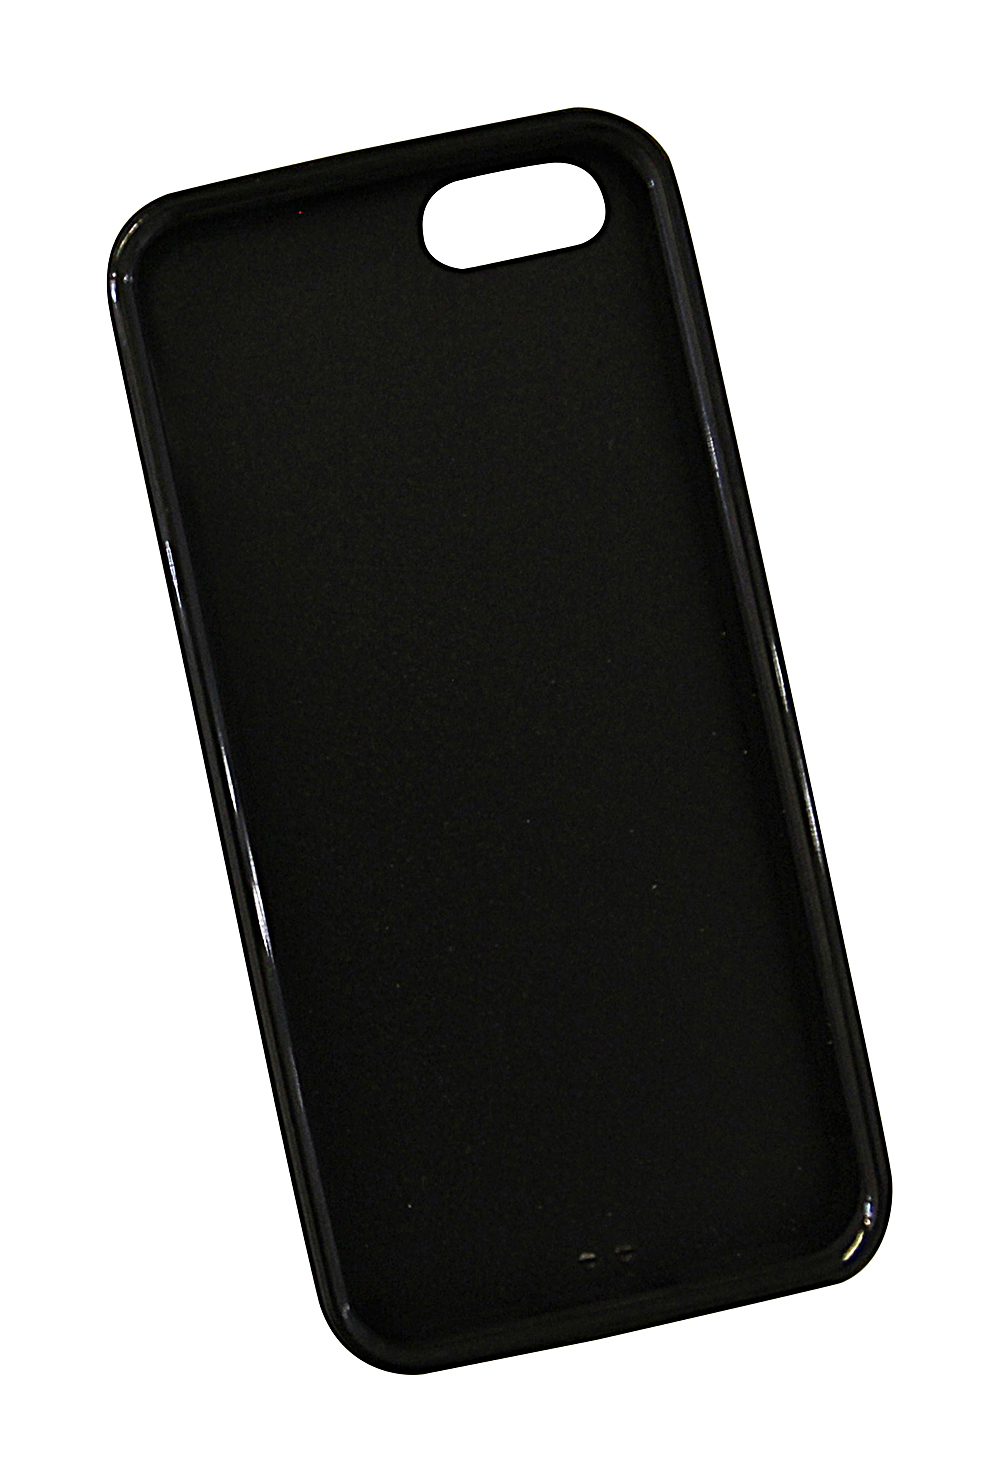 CoverInSkimblocker XL Magnet Fodral iPhone 5/5s/SE